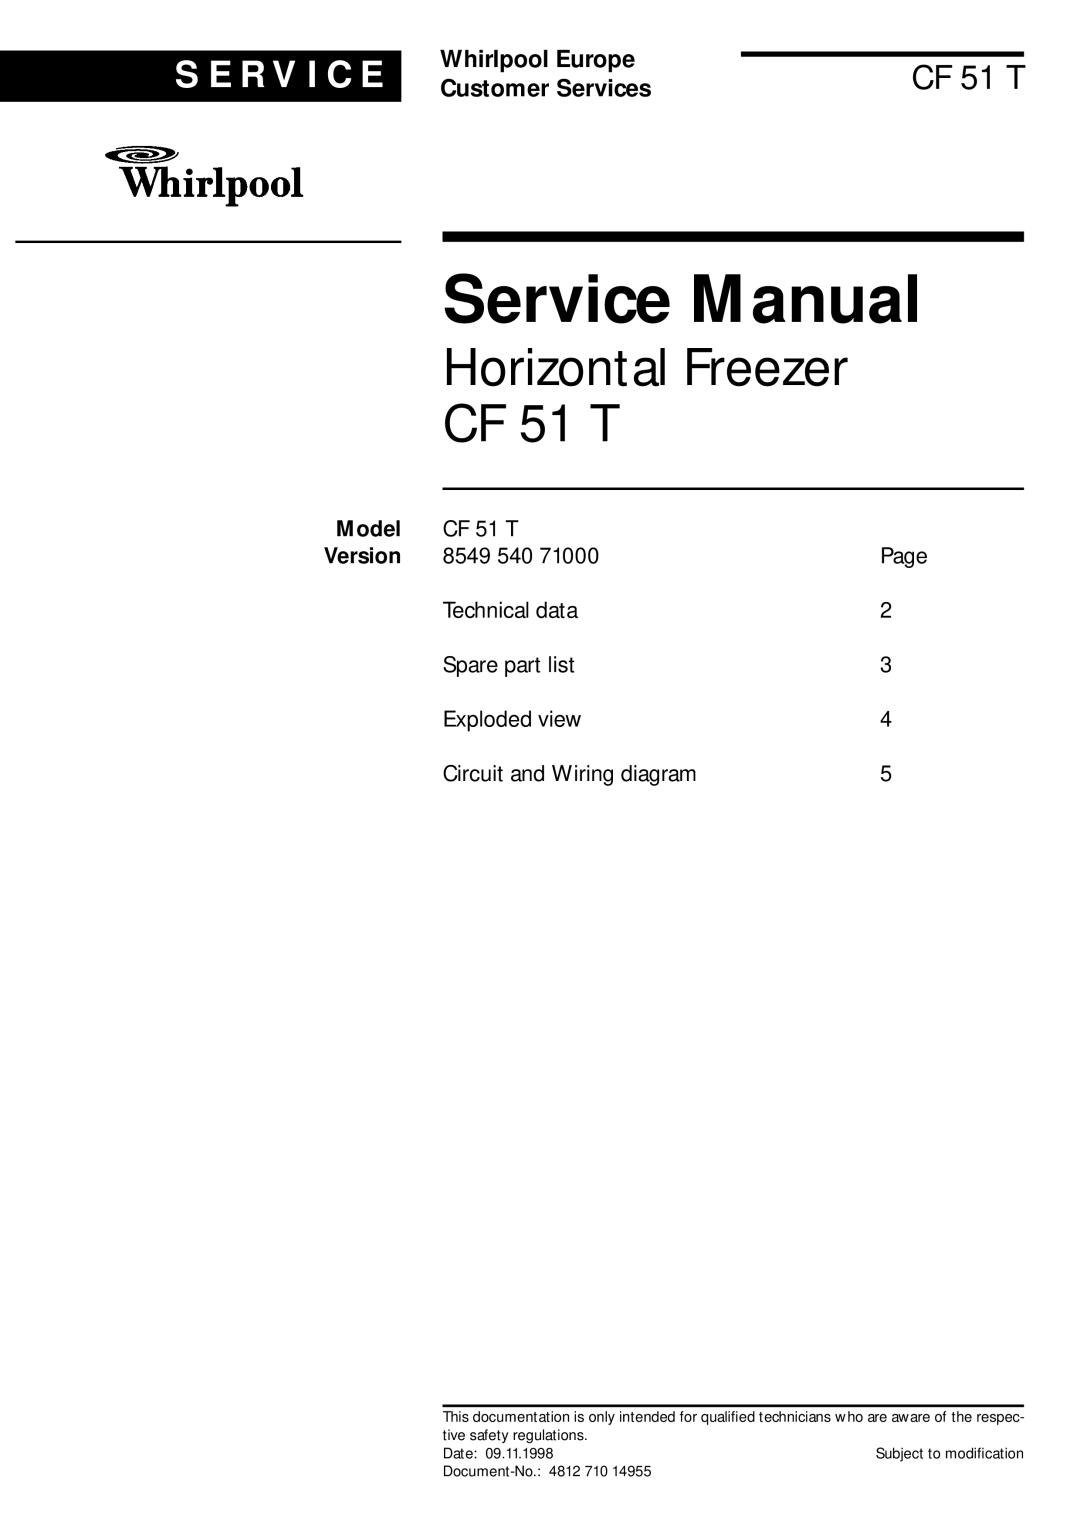 Whirlpool service manual Model, Horizontal Freezer CF 51 T, S E R V I C E, Whirlpool Europe, Customer Services 